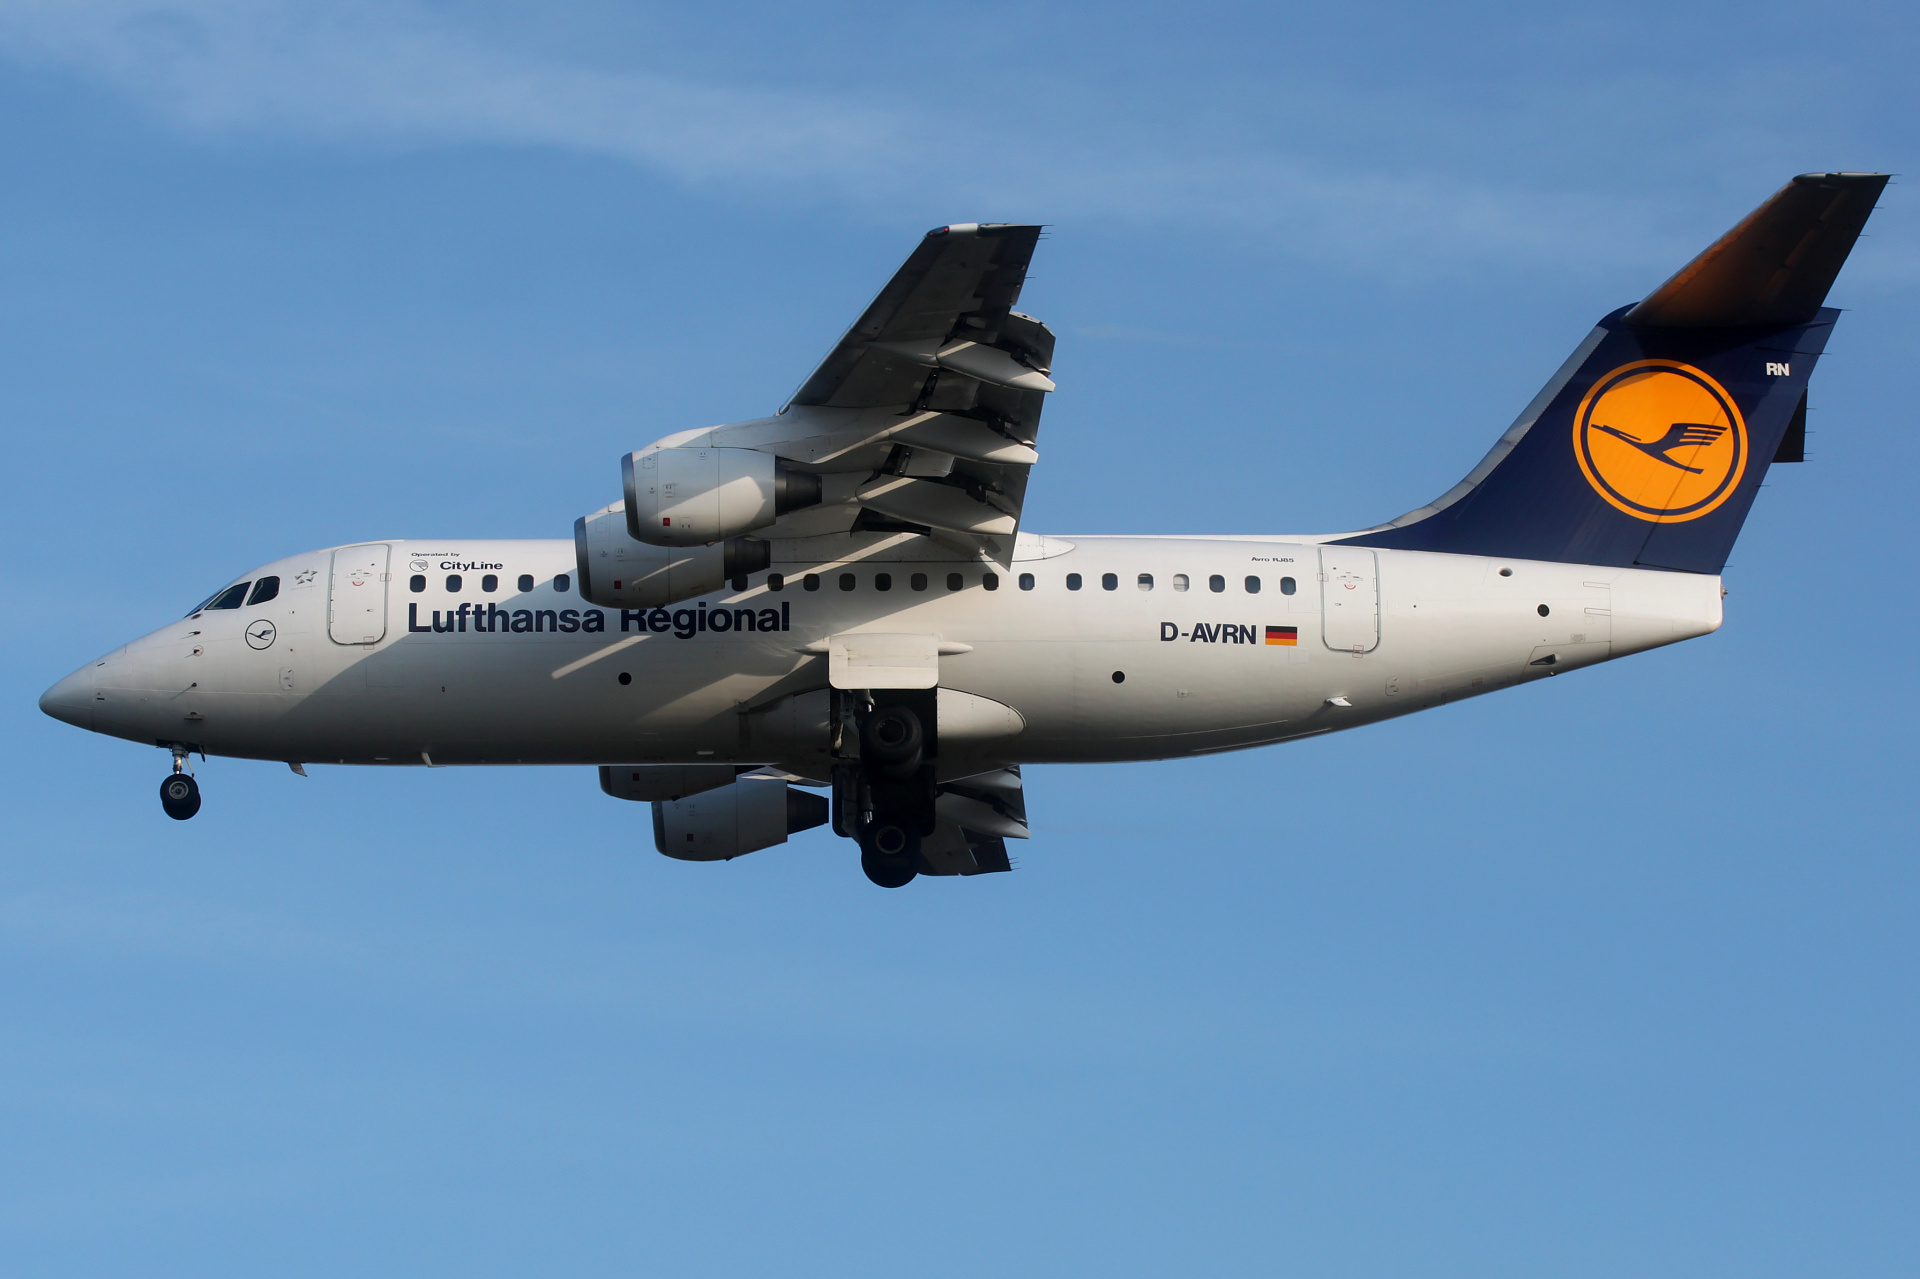 D-AVRN (CityLine) (Aircraft » EPWA Spotting » BAe 146 and revisions » Avro RJ85 » Lufthansa Regional)